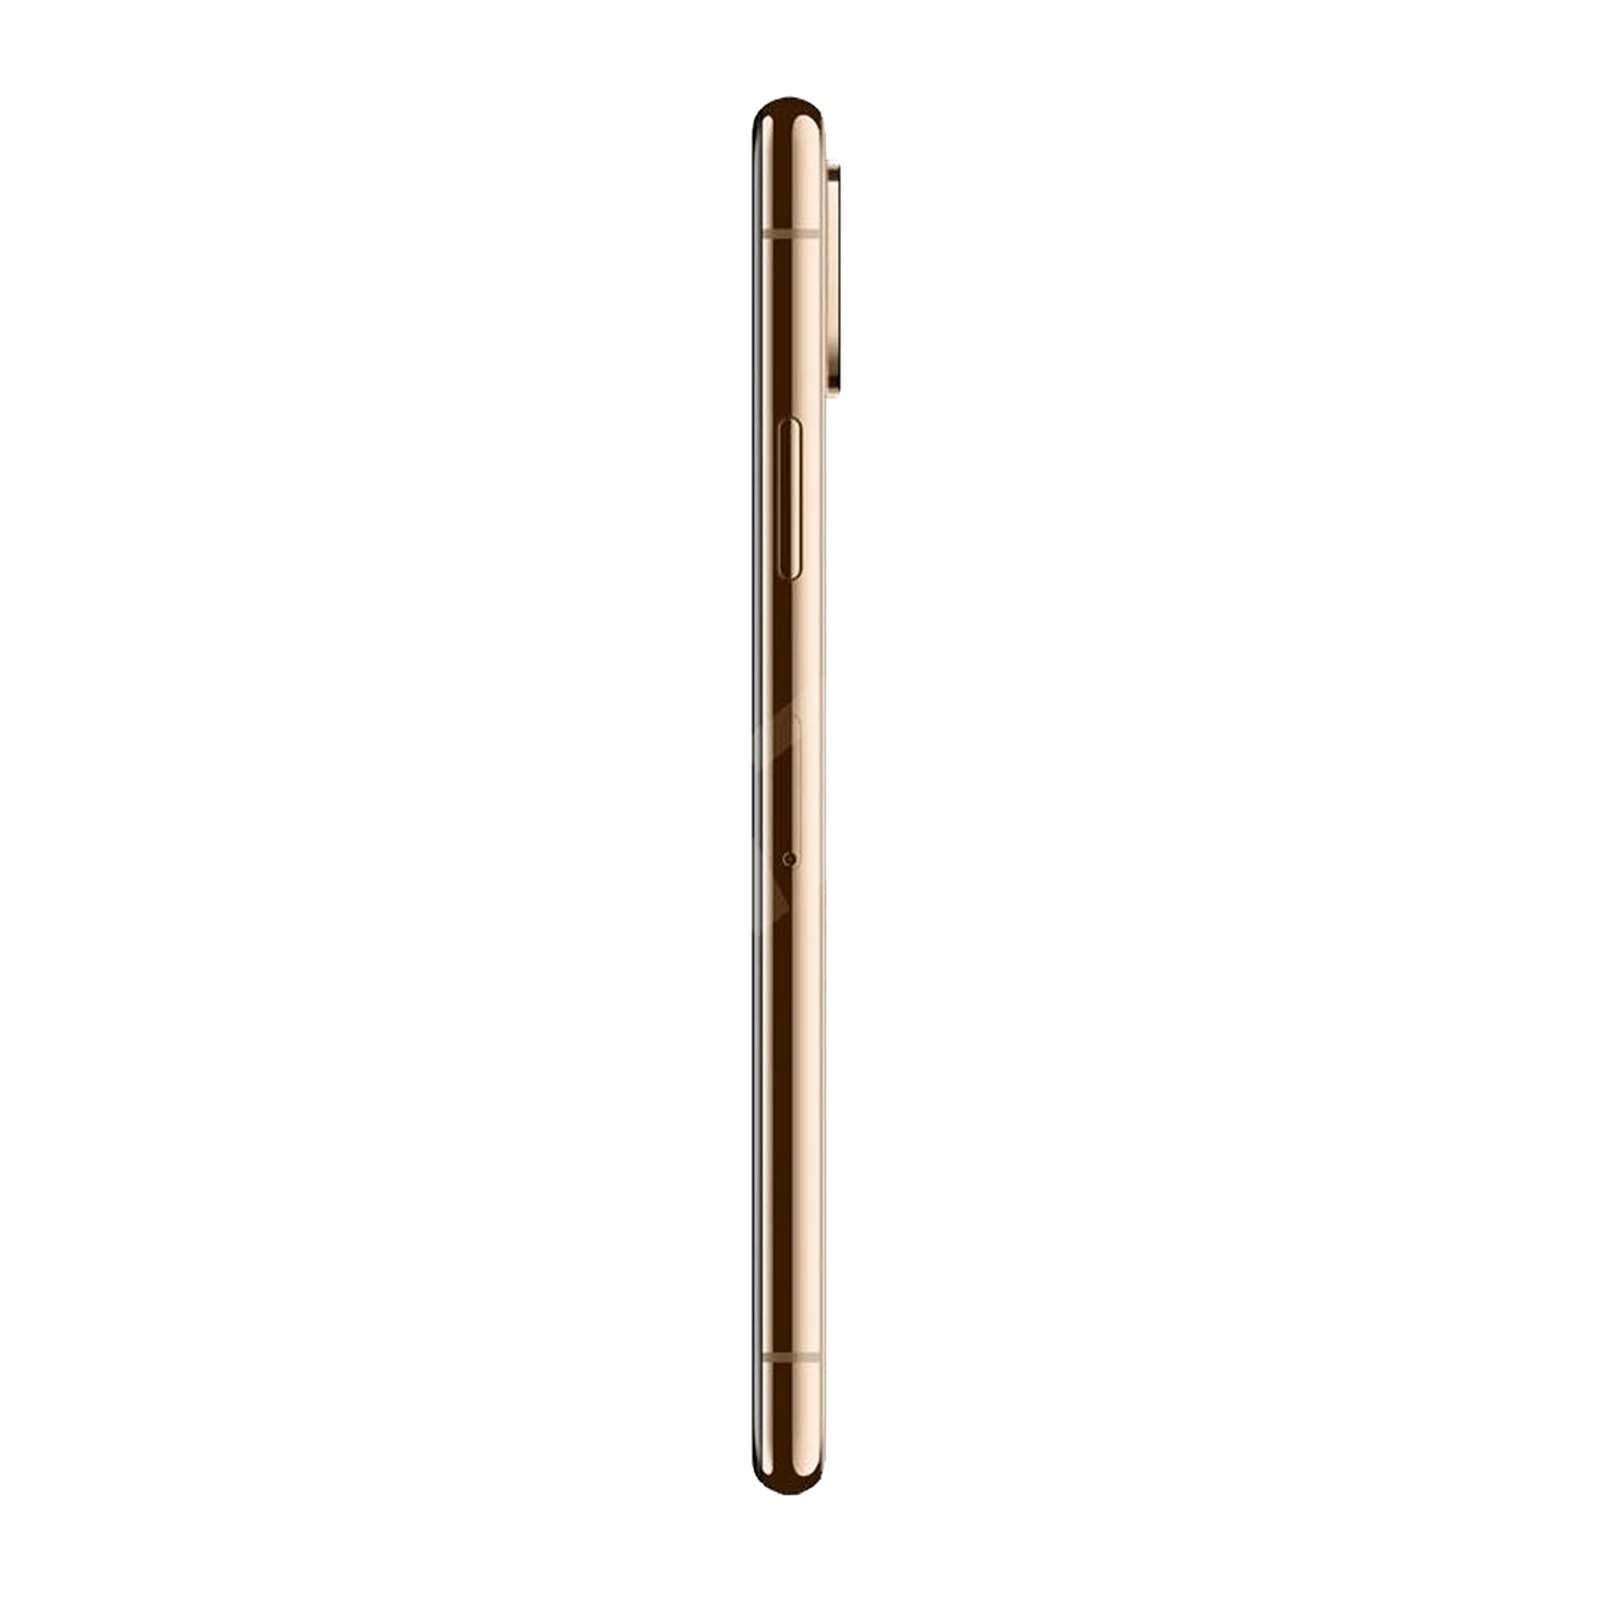 Apple iPhone XS Max 64GB Gold Fair - Unlocked